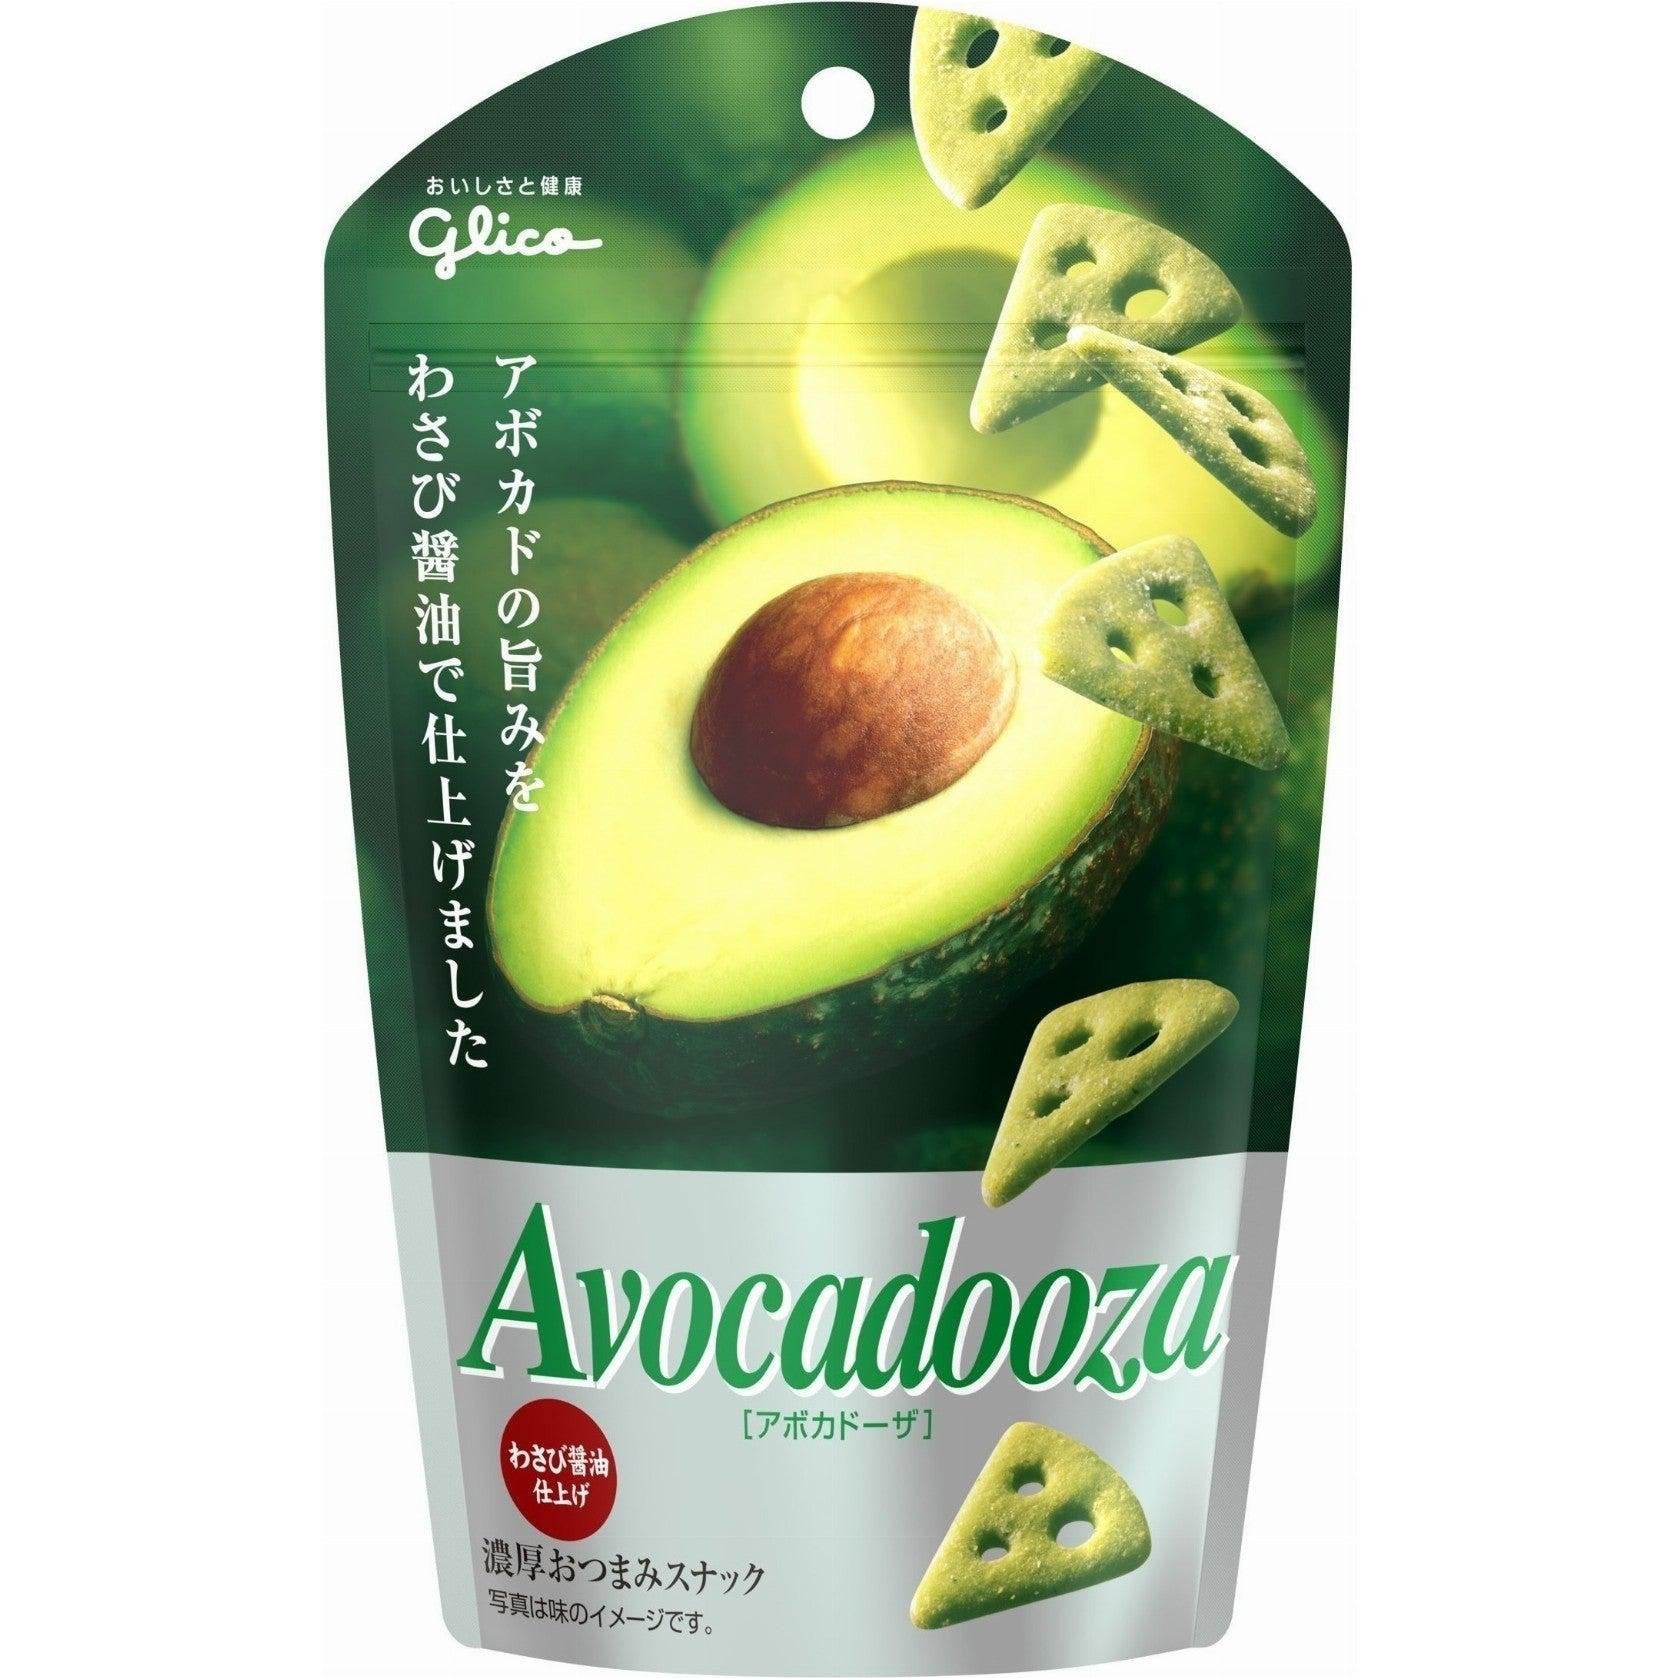 Glico Avocadooza Avocado Crackers 40g (Pack of 10)